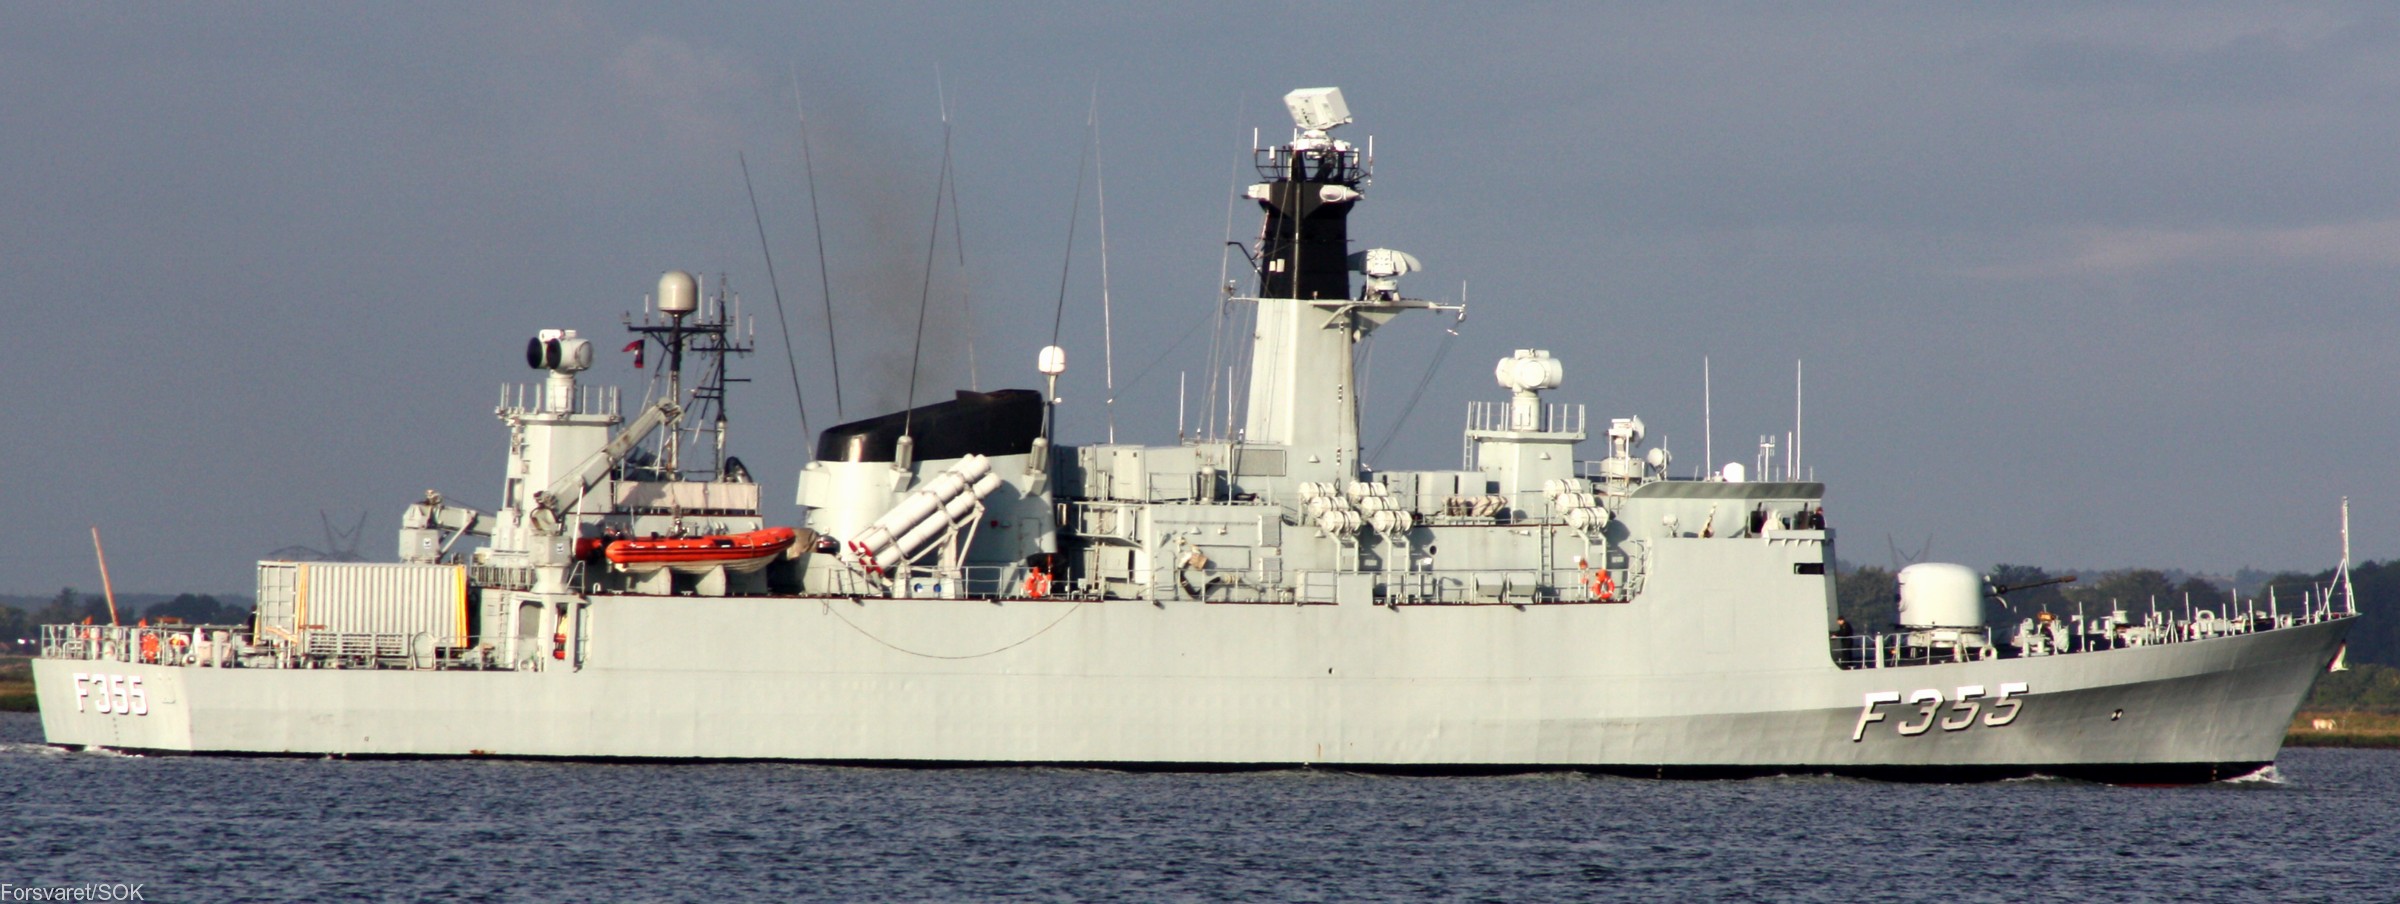 f-355 hdms olfert fischer niels juel class corvette royal danish navy rdn kongelige danske marine kdm 17